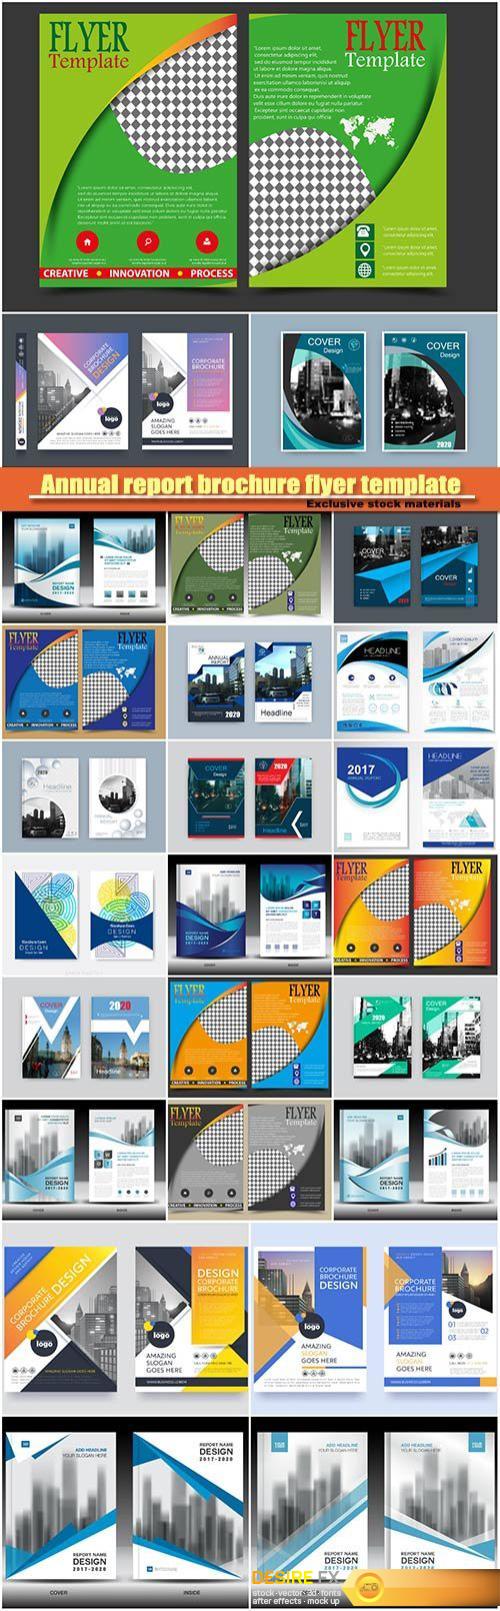 Annual report brochure flyer template, cover design, business company profile